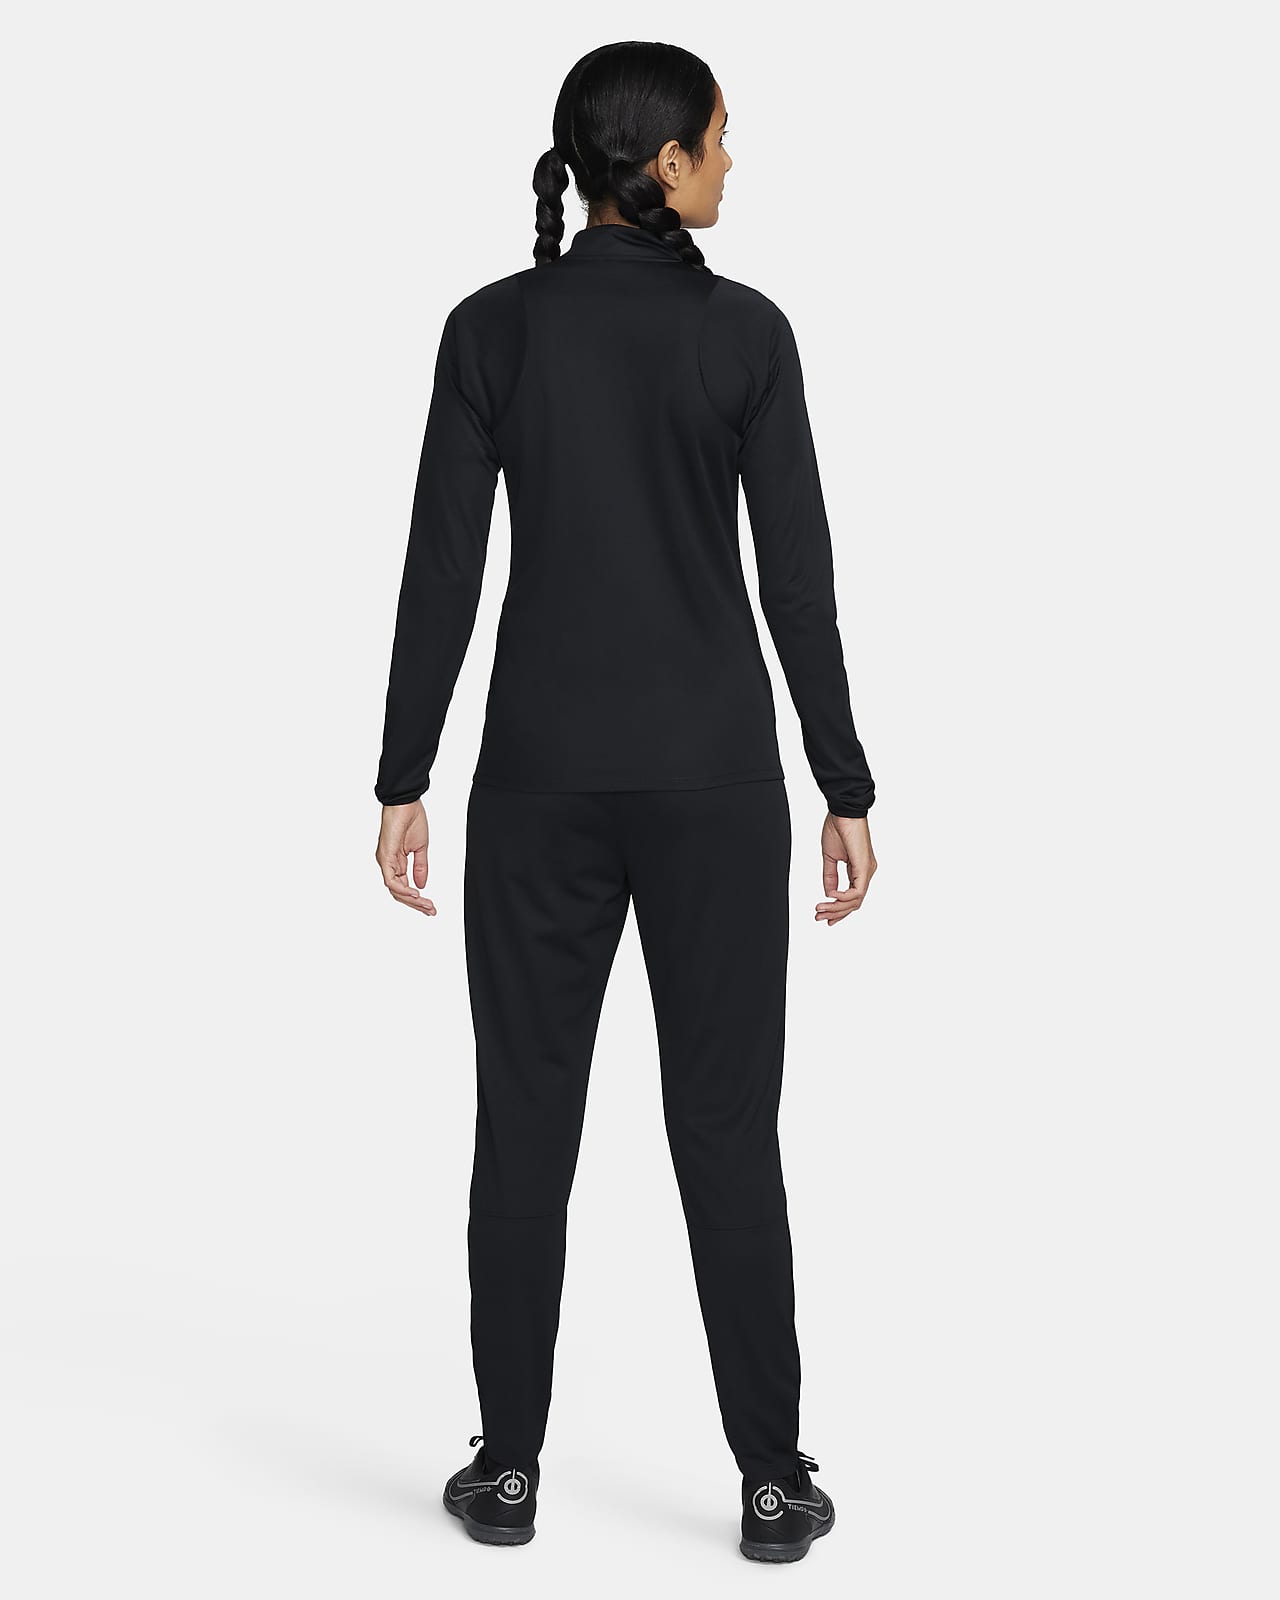 Nike Academy Track Pants Womens